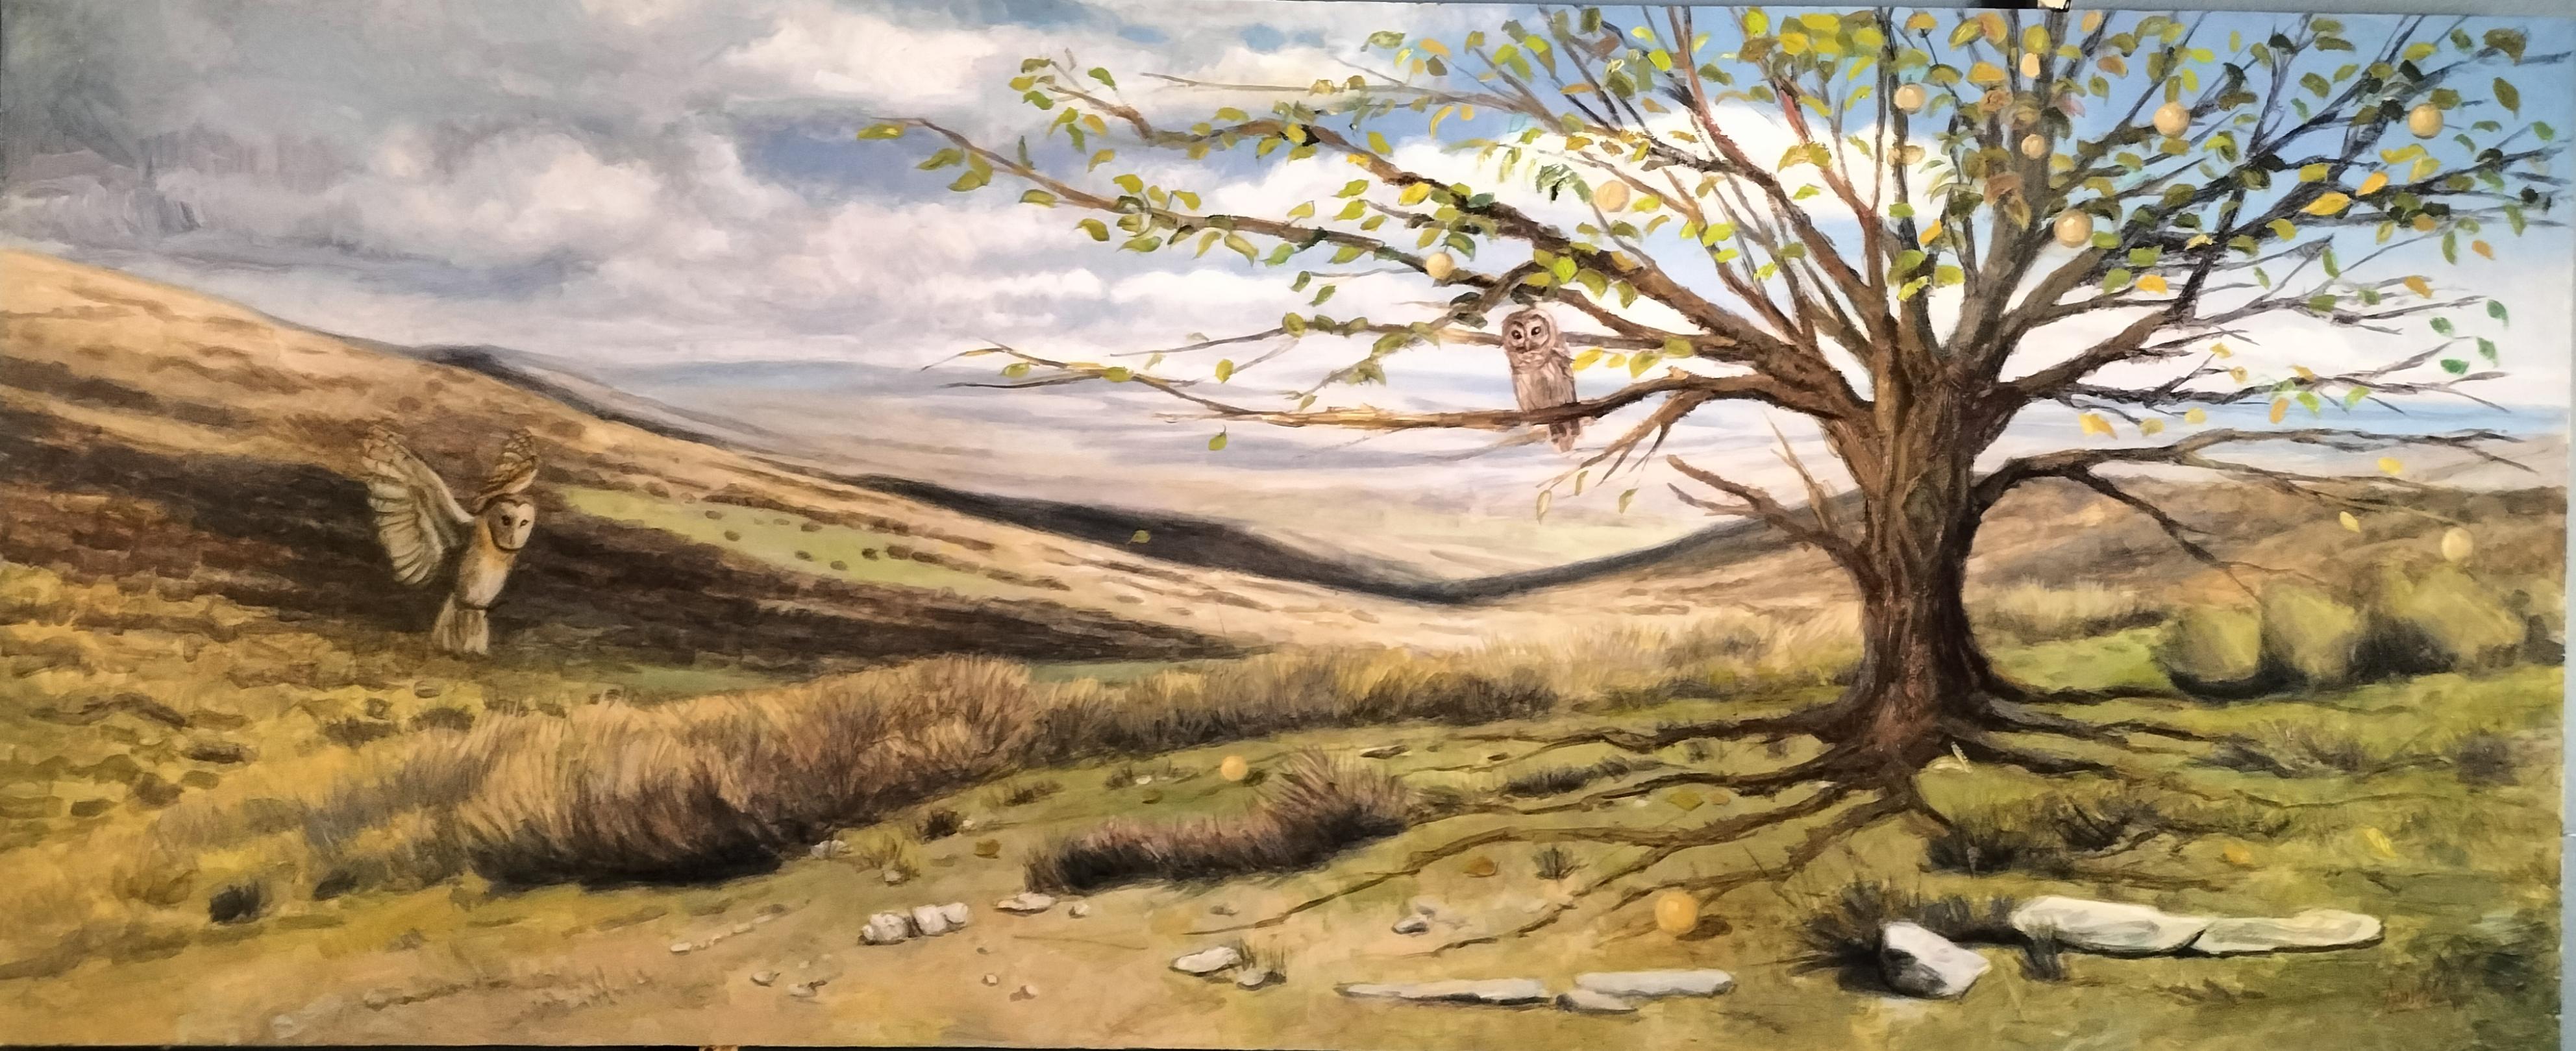 Anhelo Landscape Painting - "Owls at Dawn", Oil on panel Post-Impressionist Large Format Living Landscape